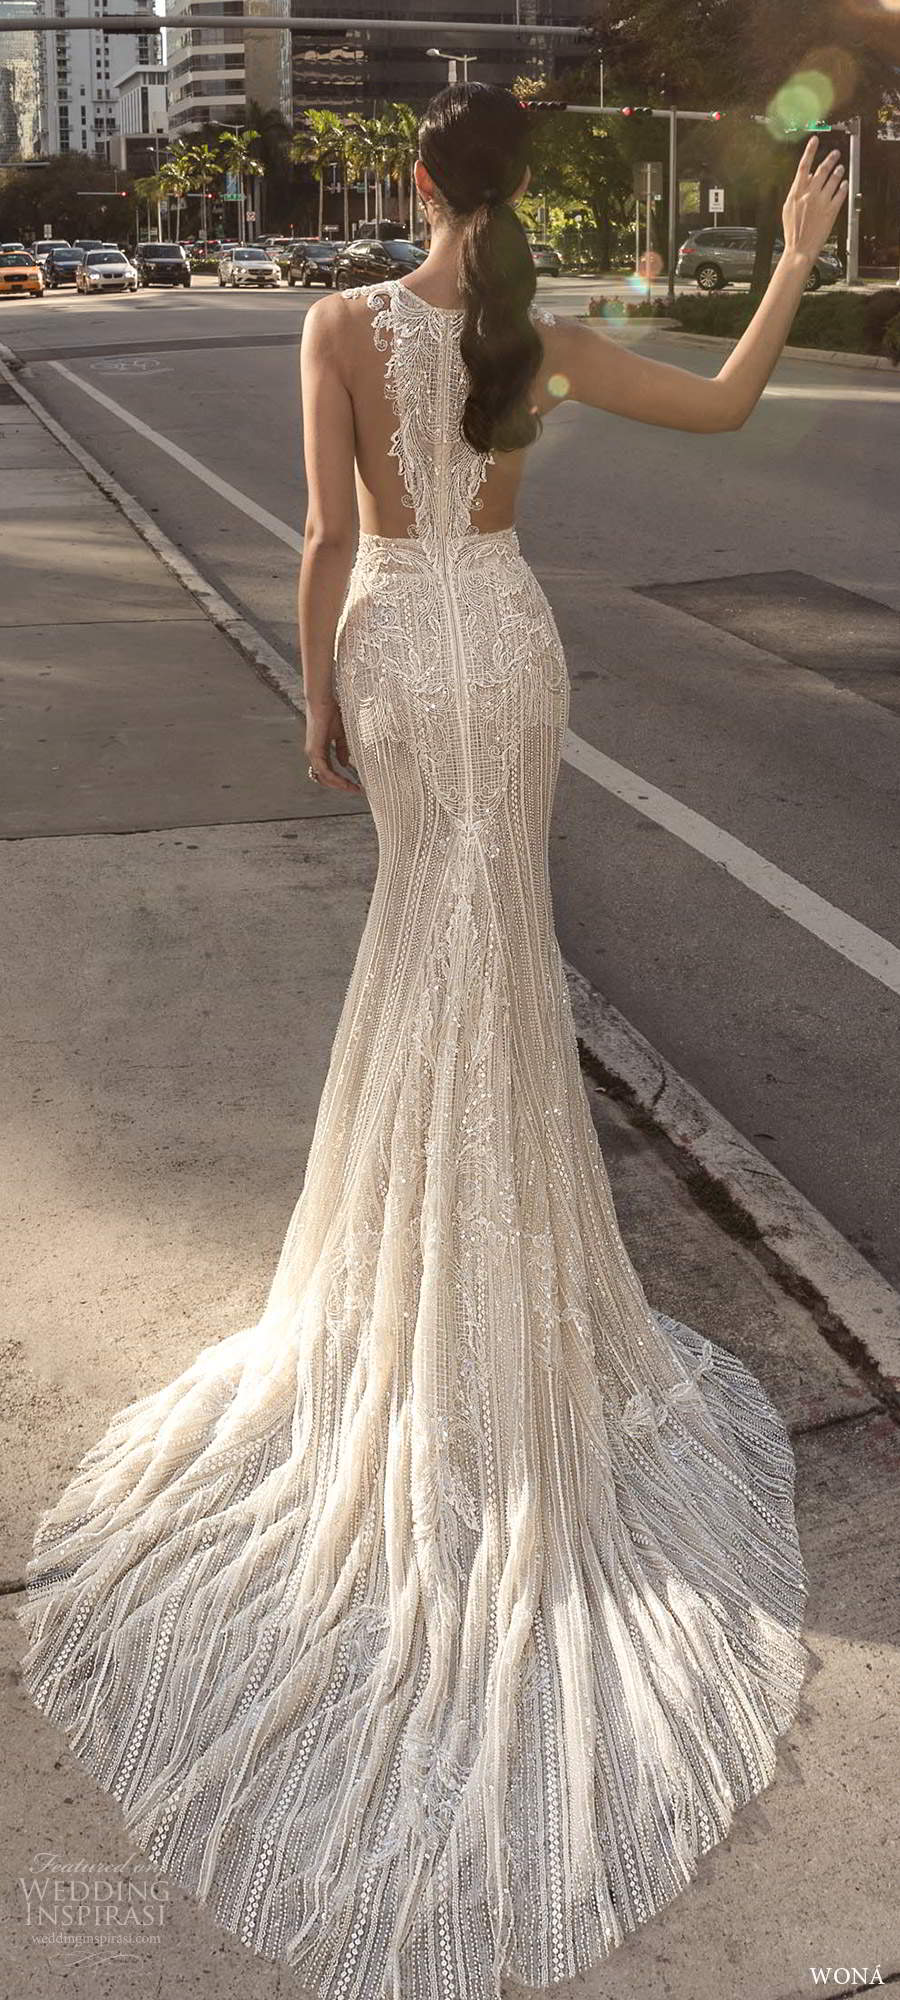 wona fall 2020 bridal sleeveless jewel neckline illusion side cutout fully embellished lace glitzy trumpet sheath wedding dress chapel train (14) bv